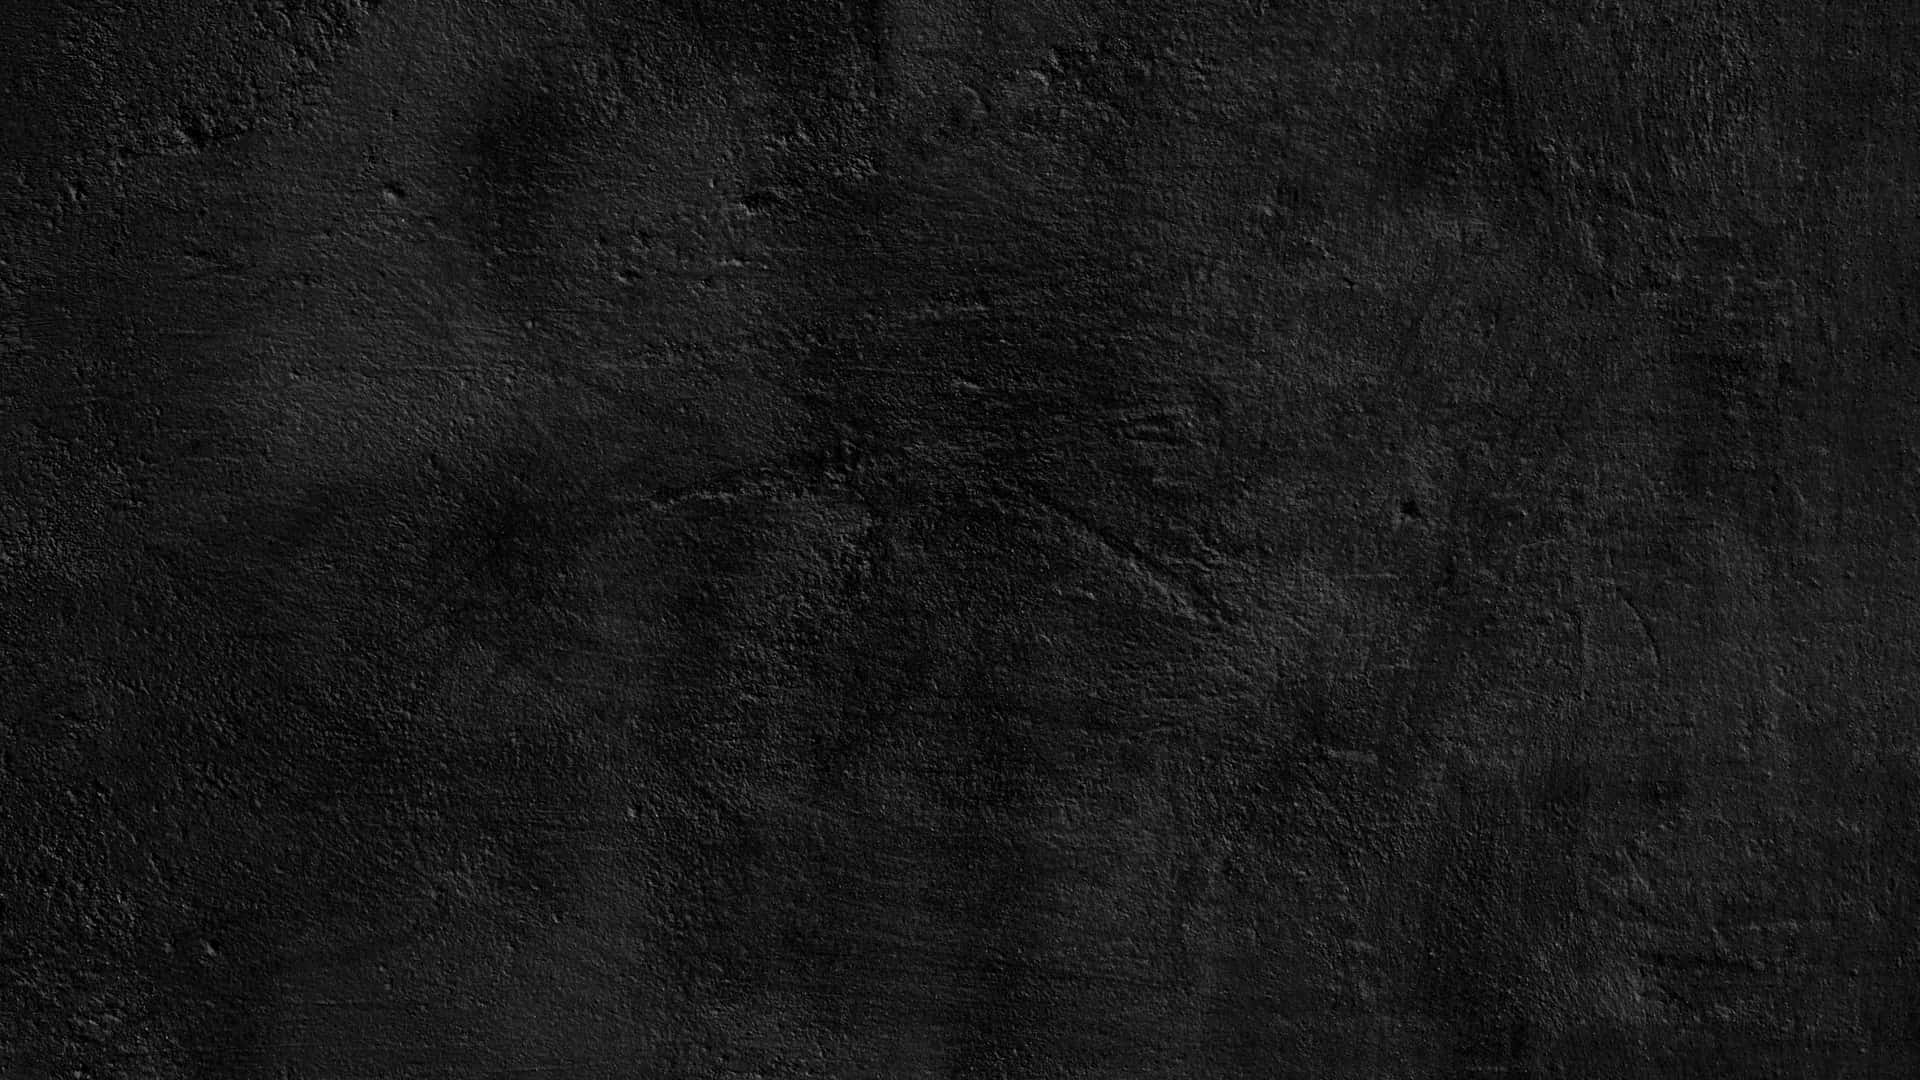 Mörkgrunge Textur Med Slitna, Bleknade Effekter. Wallpaper